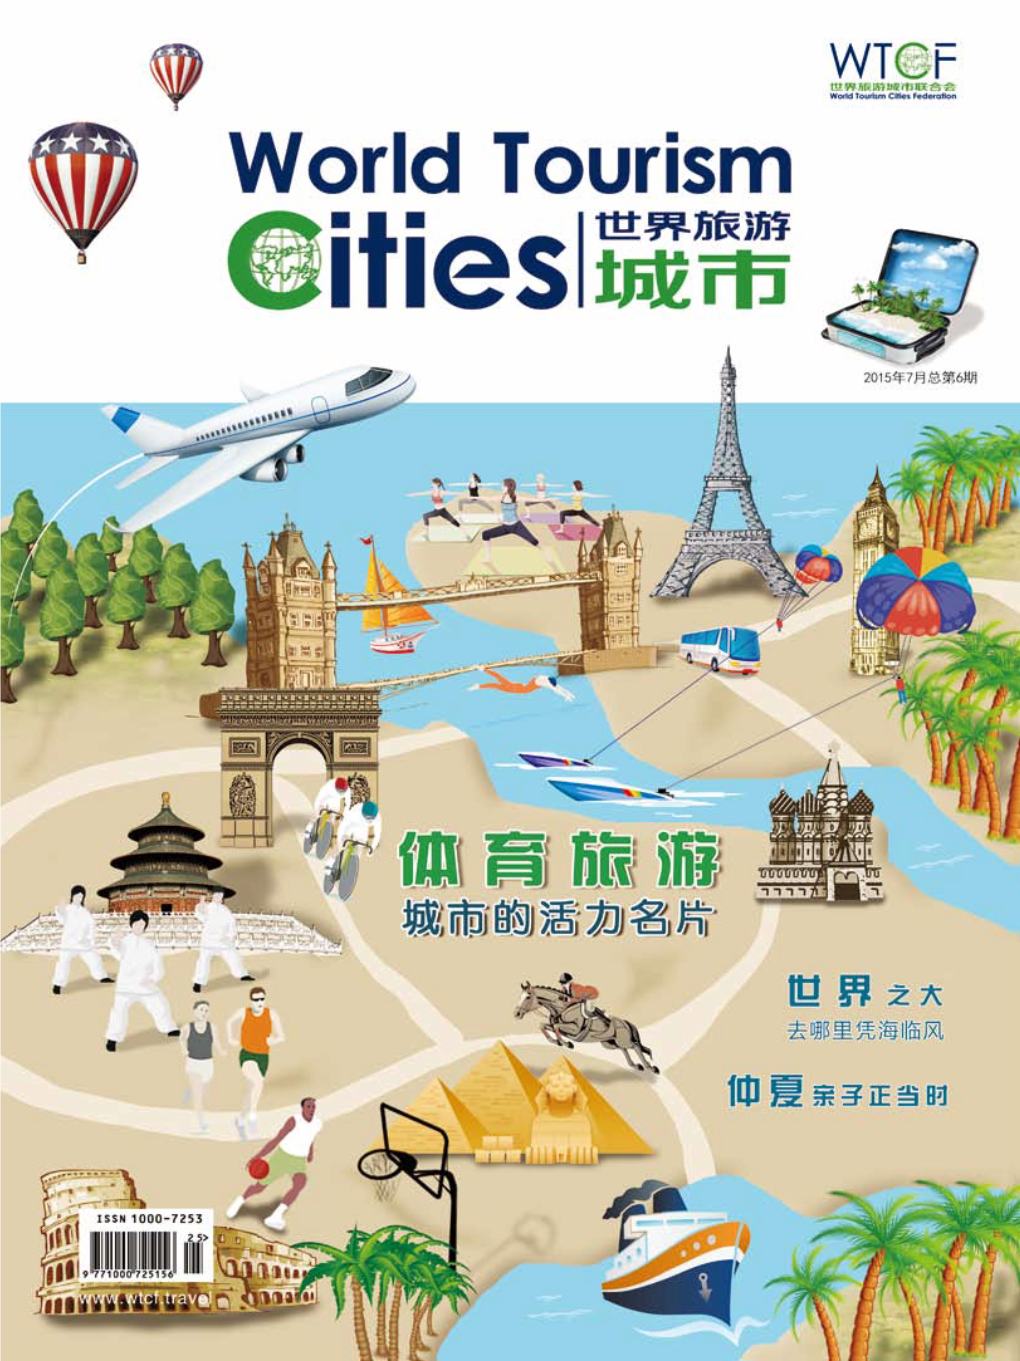 World Tourism City